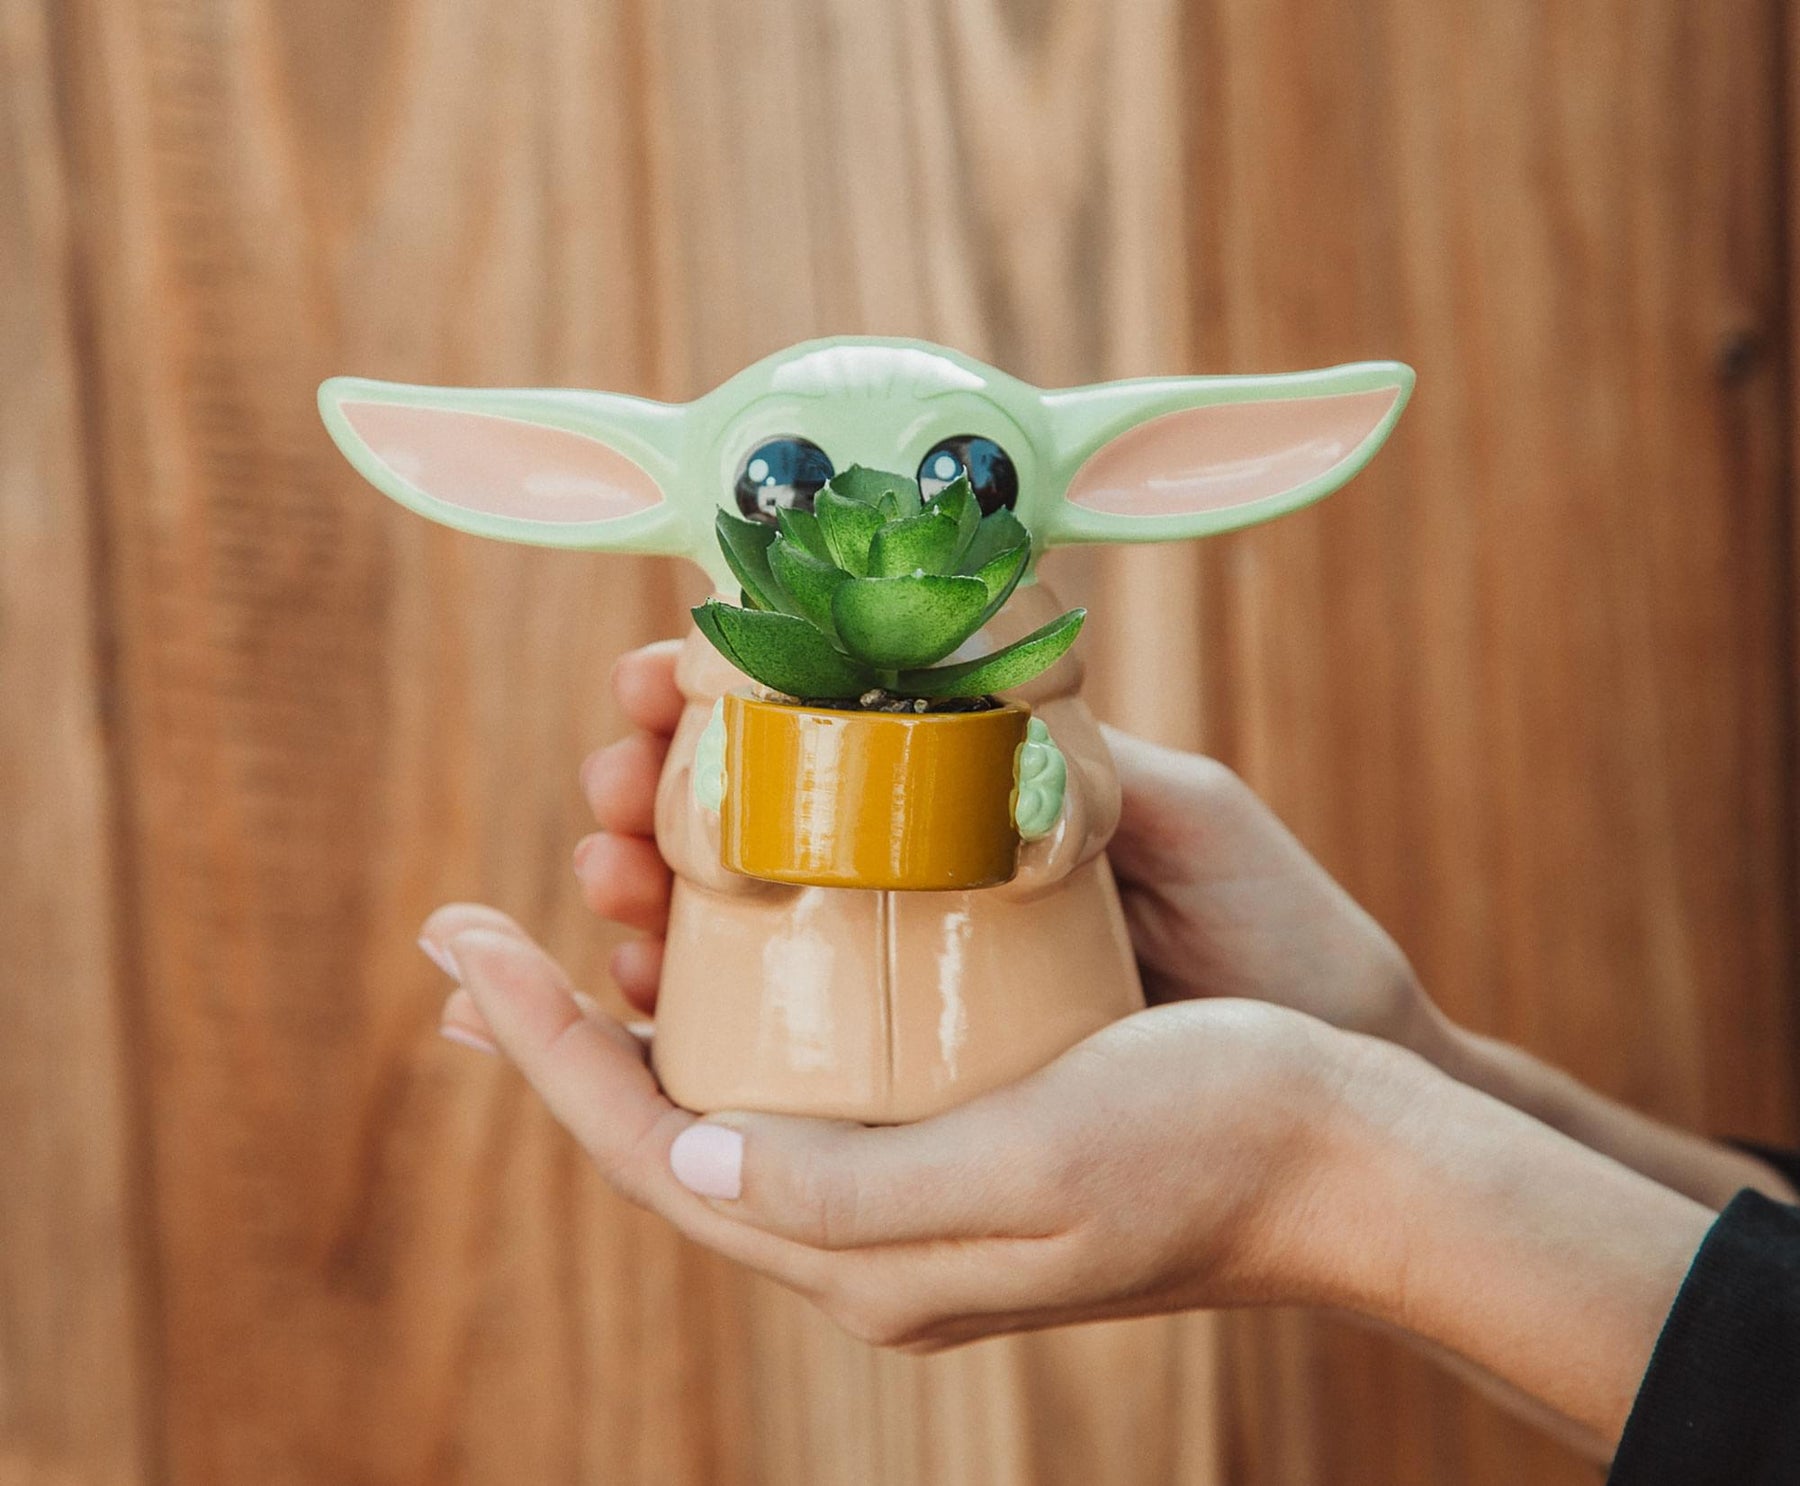 Baby Yoda Action Figure Dolls, Baby Yoda Coffee Cups